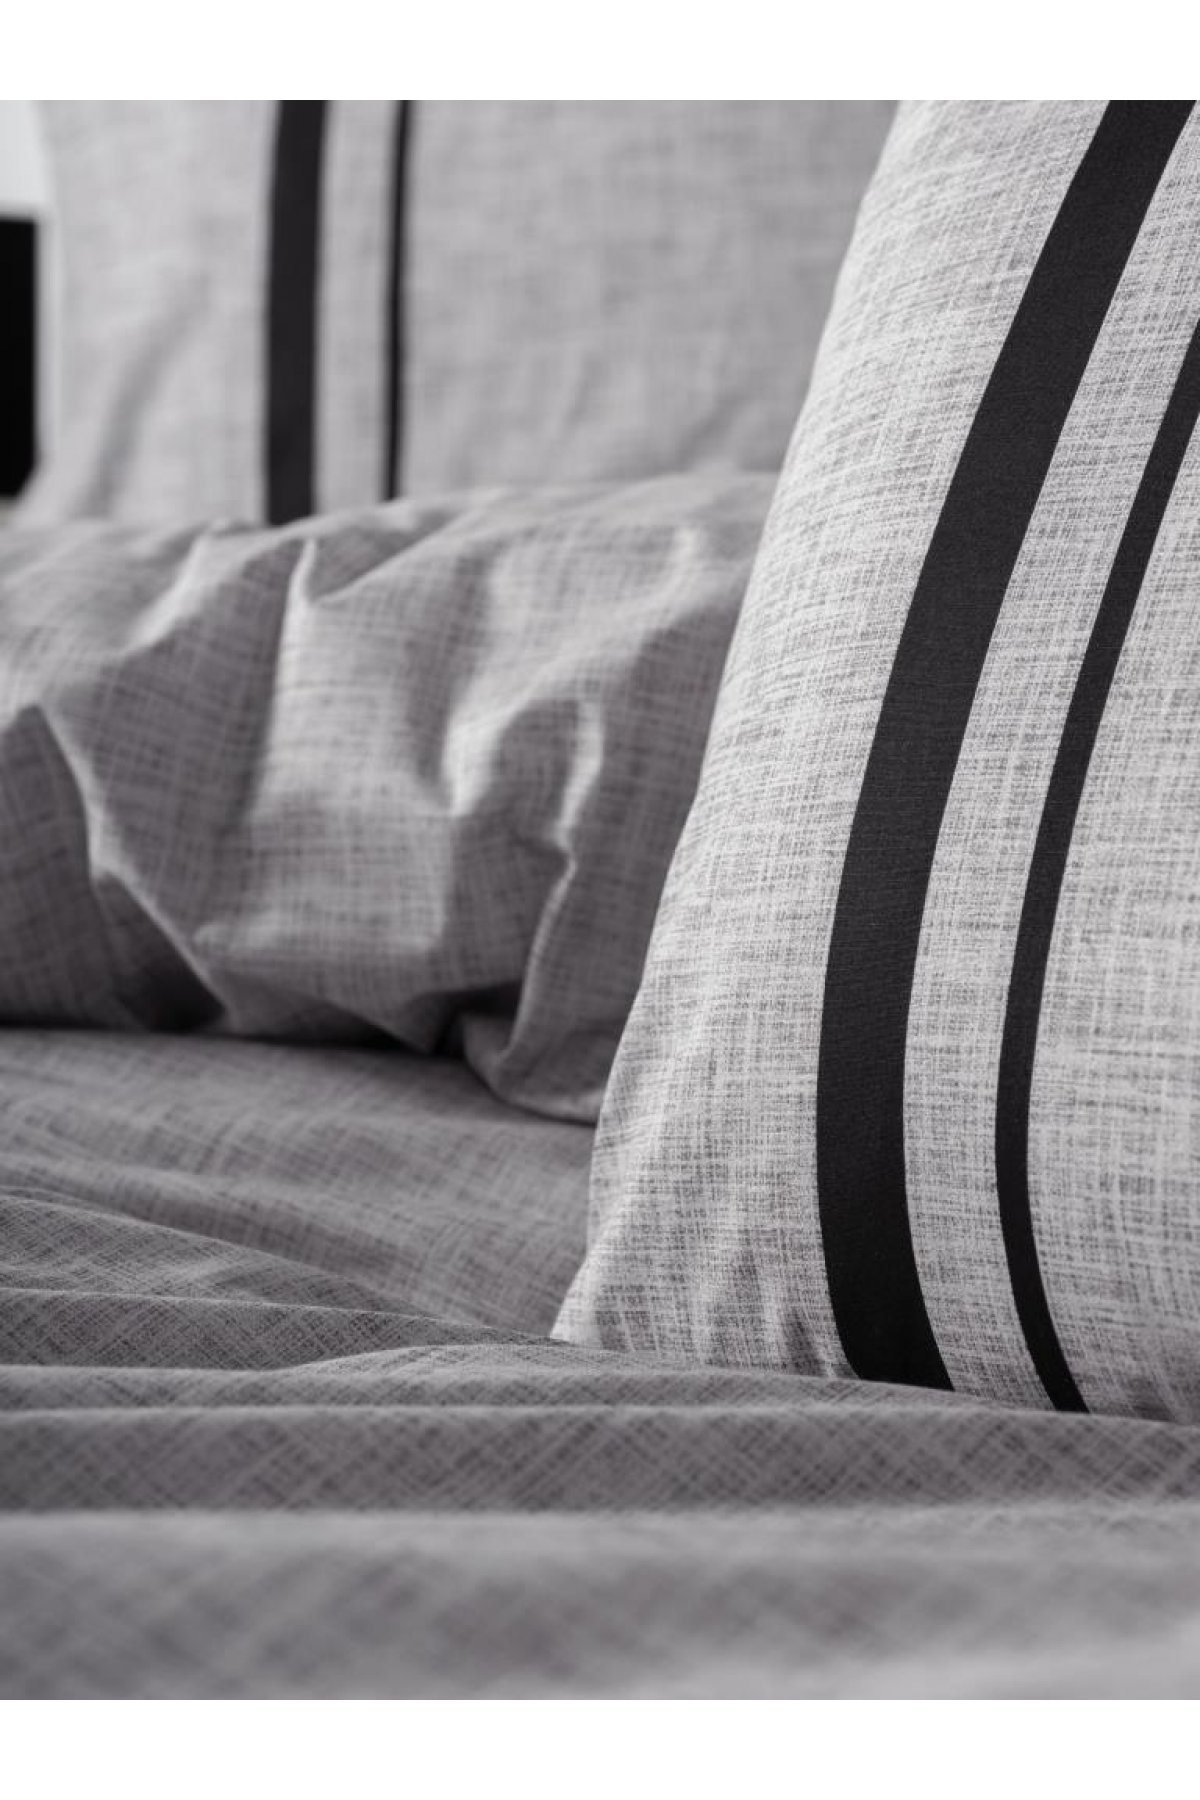 Bedding-Light Grey